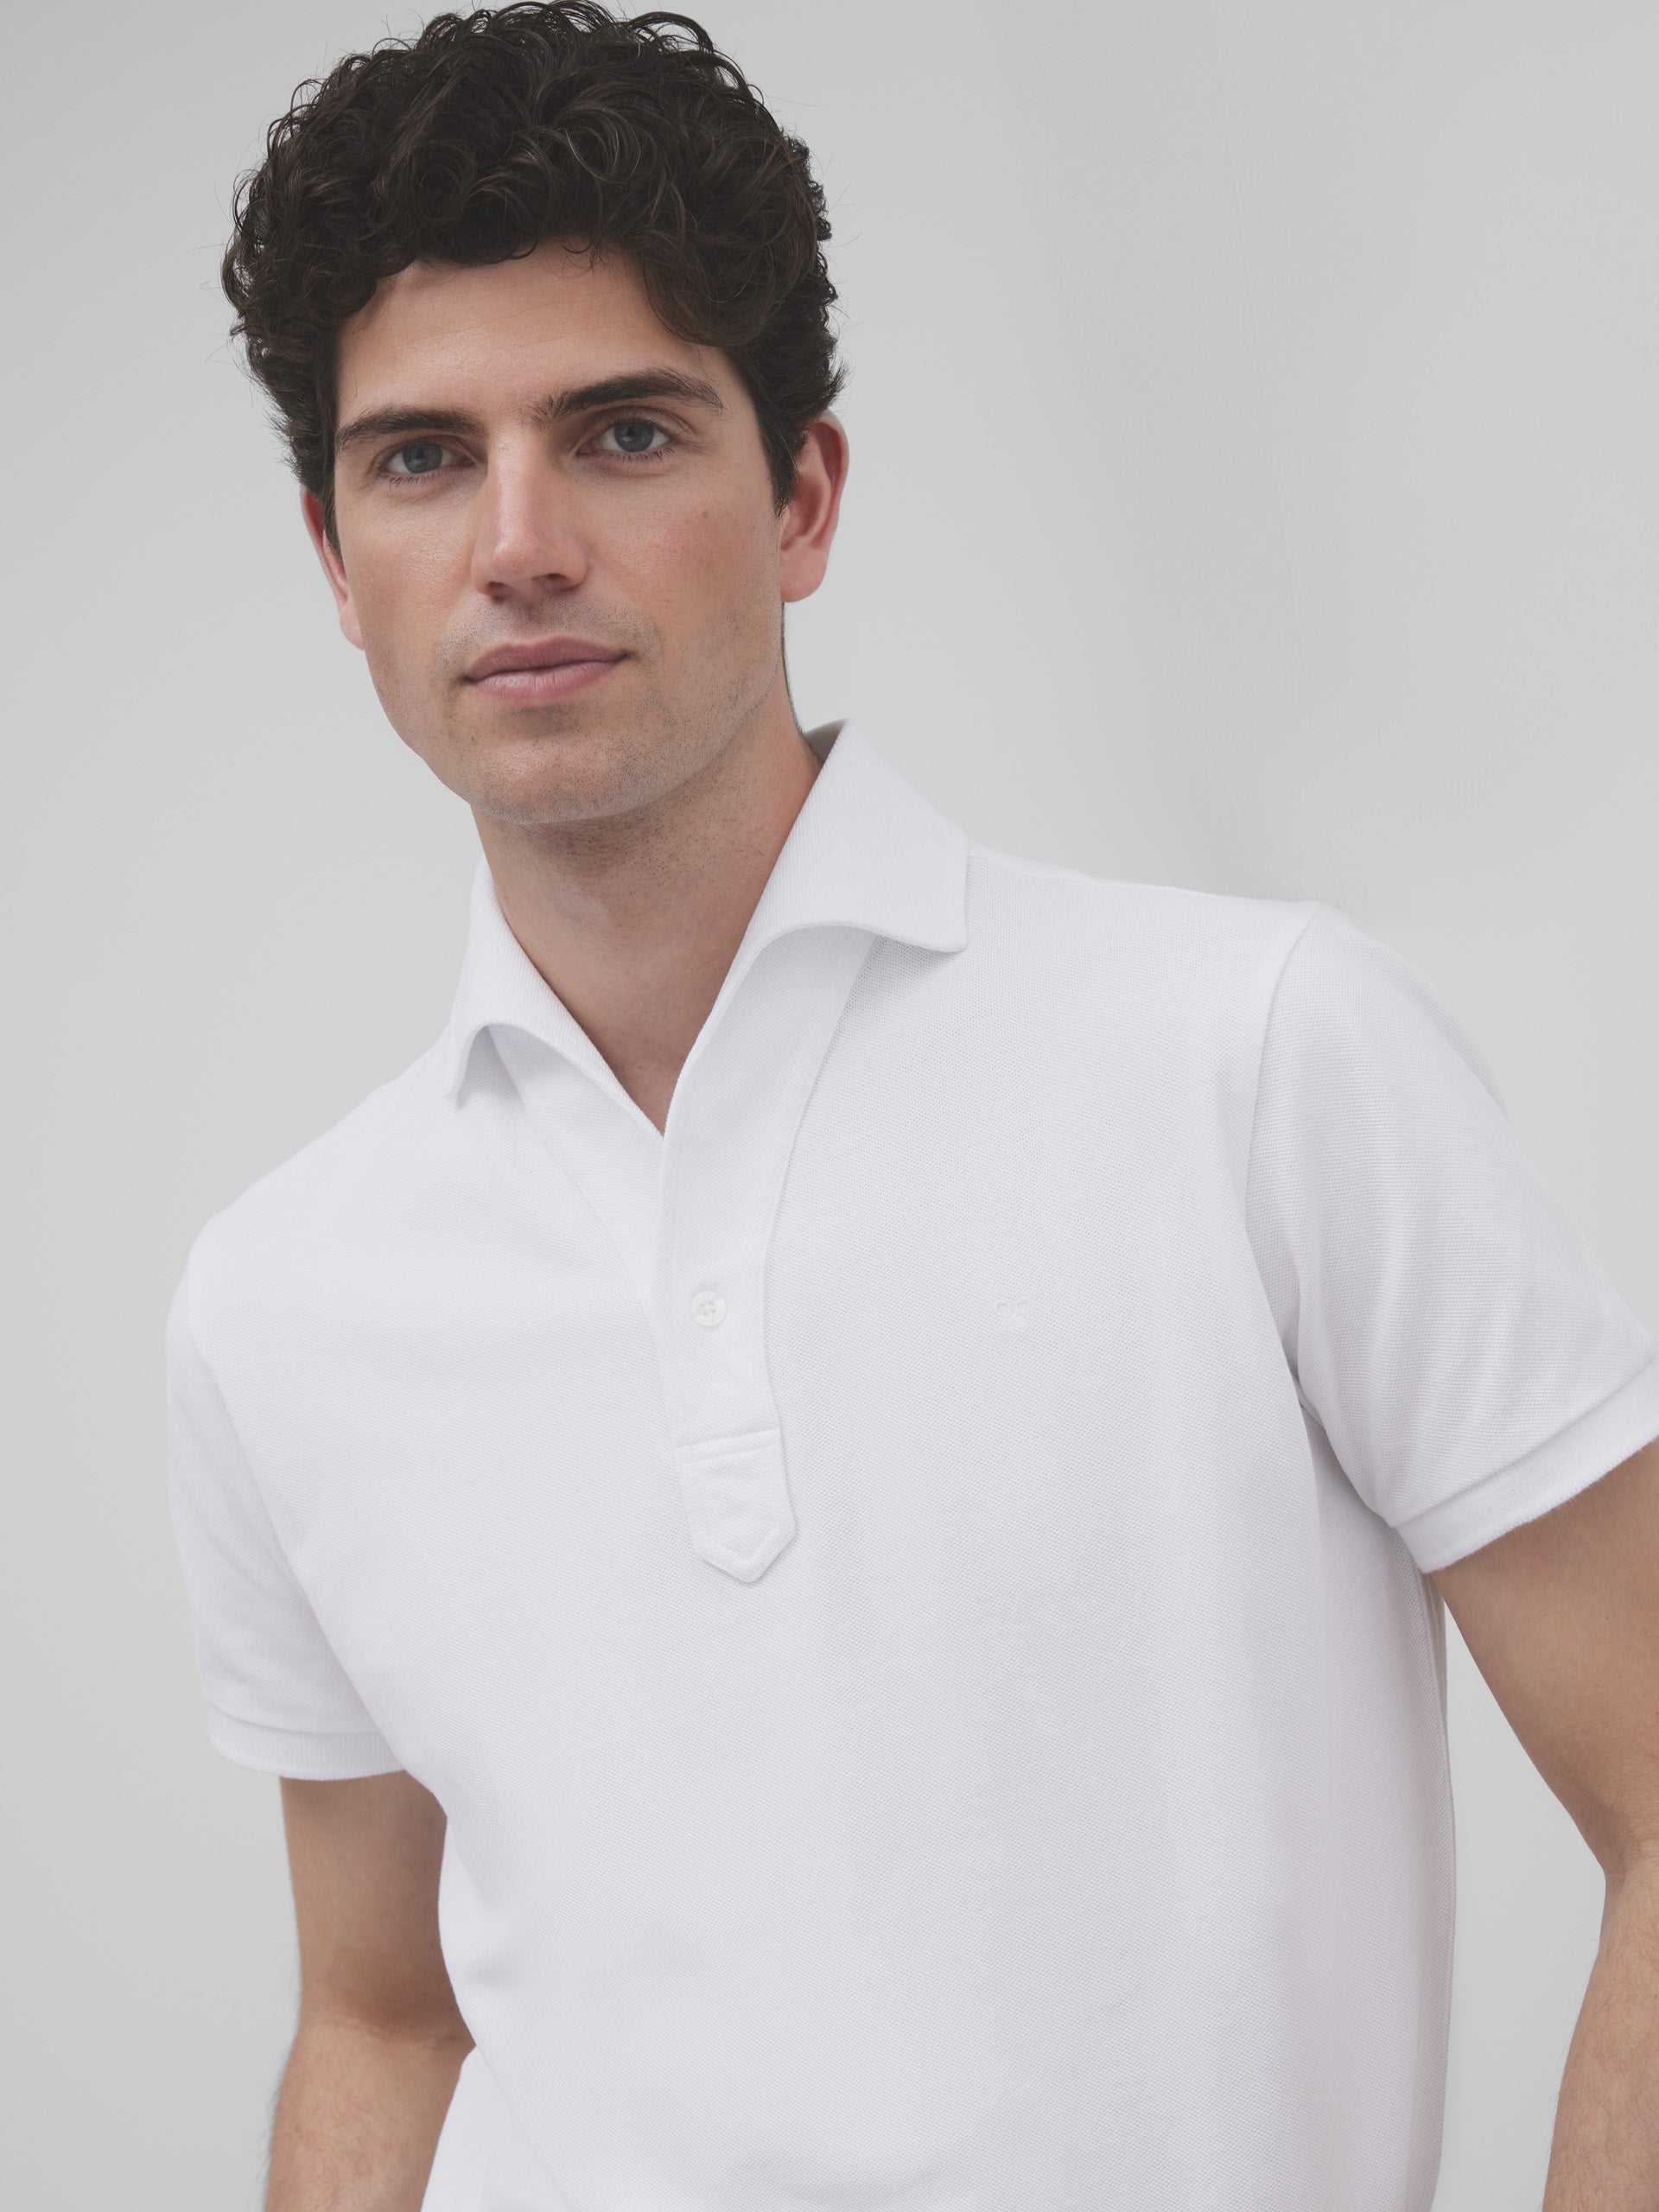 Silbon unique white polo shirt